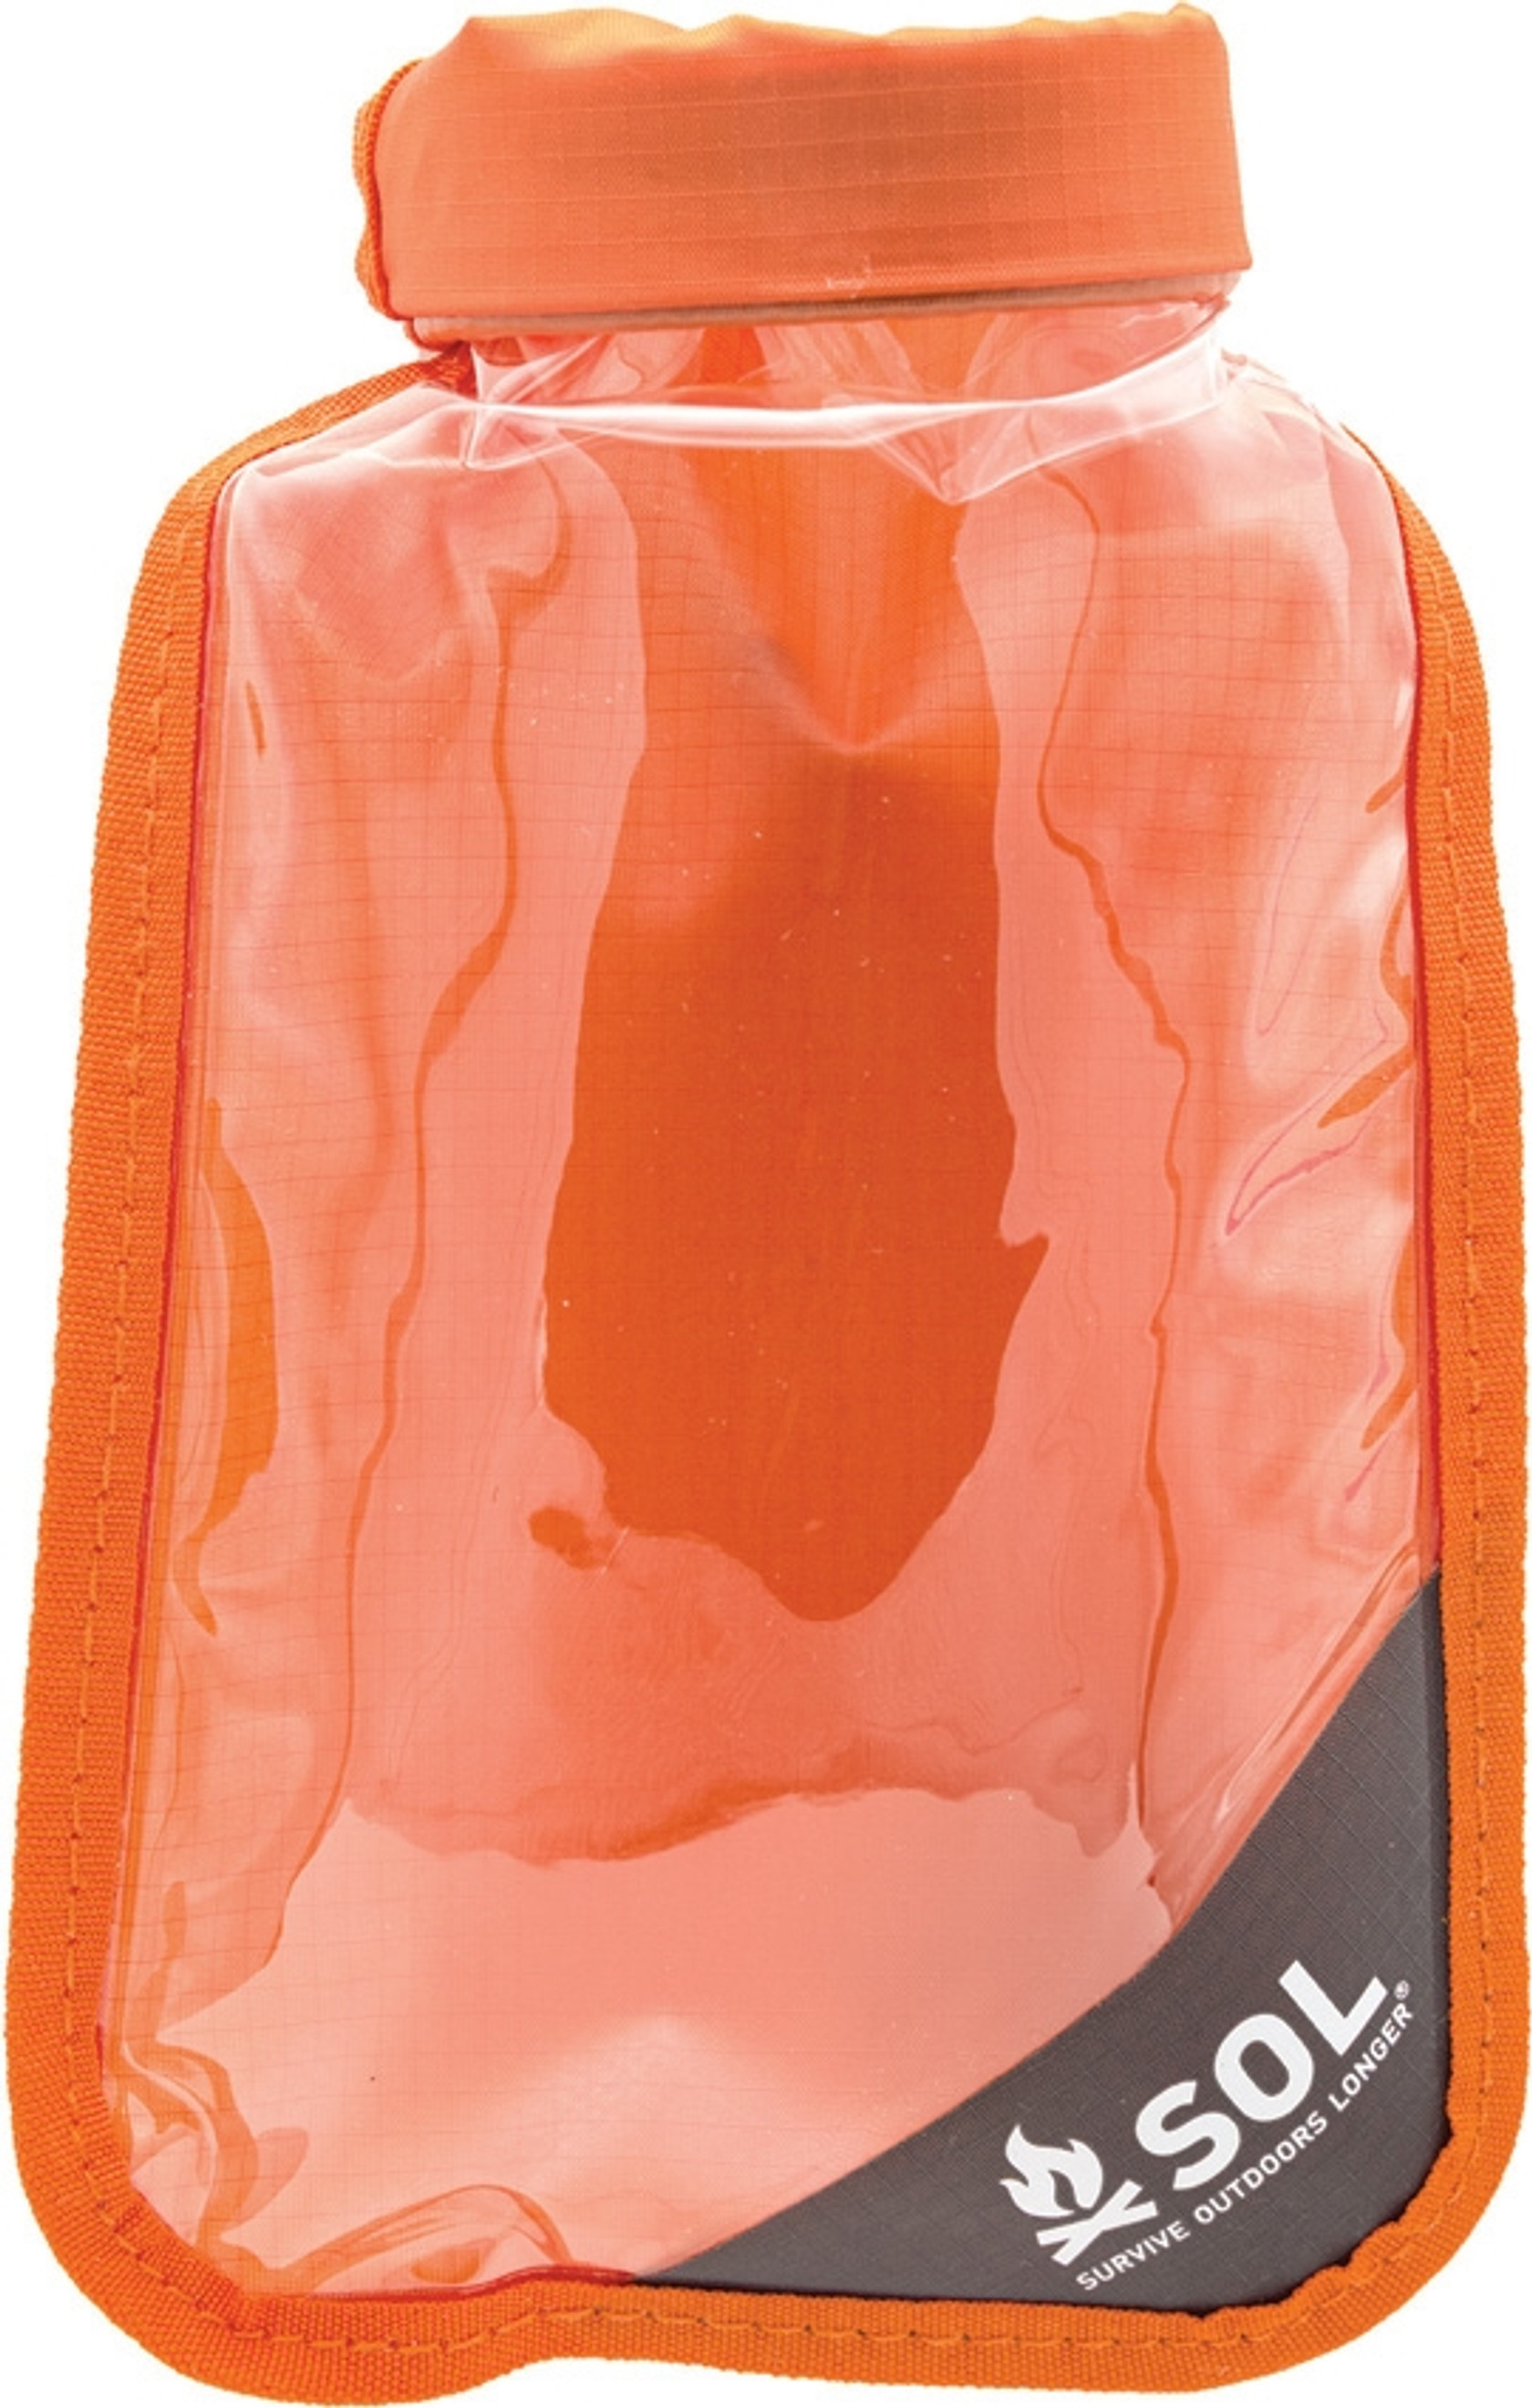 Waterproof Gear Bag 1.0